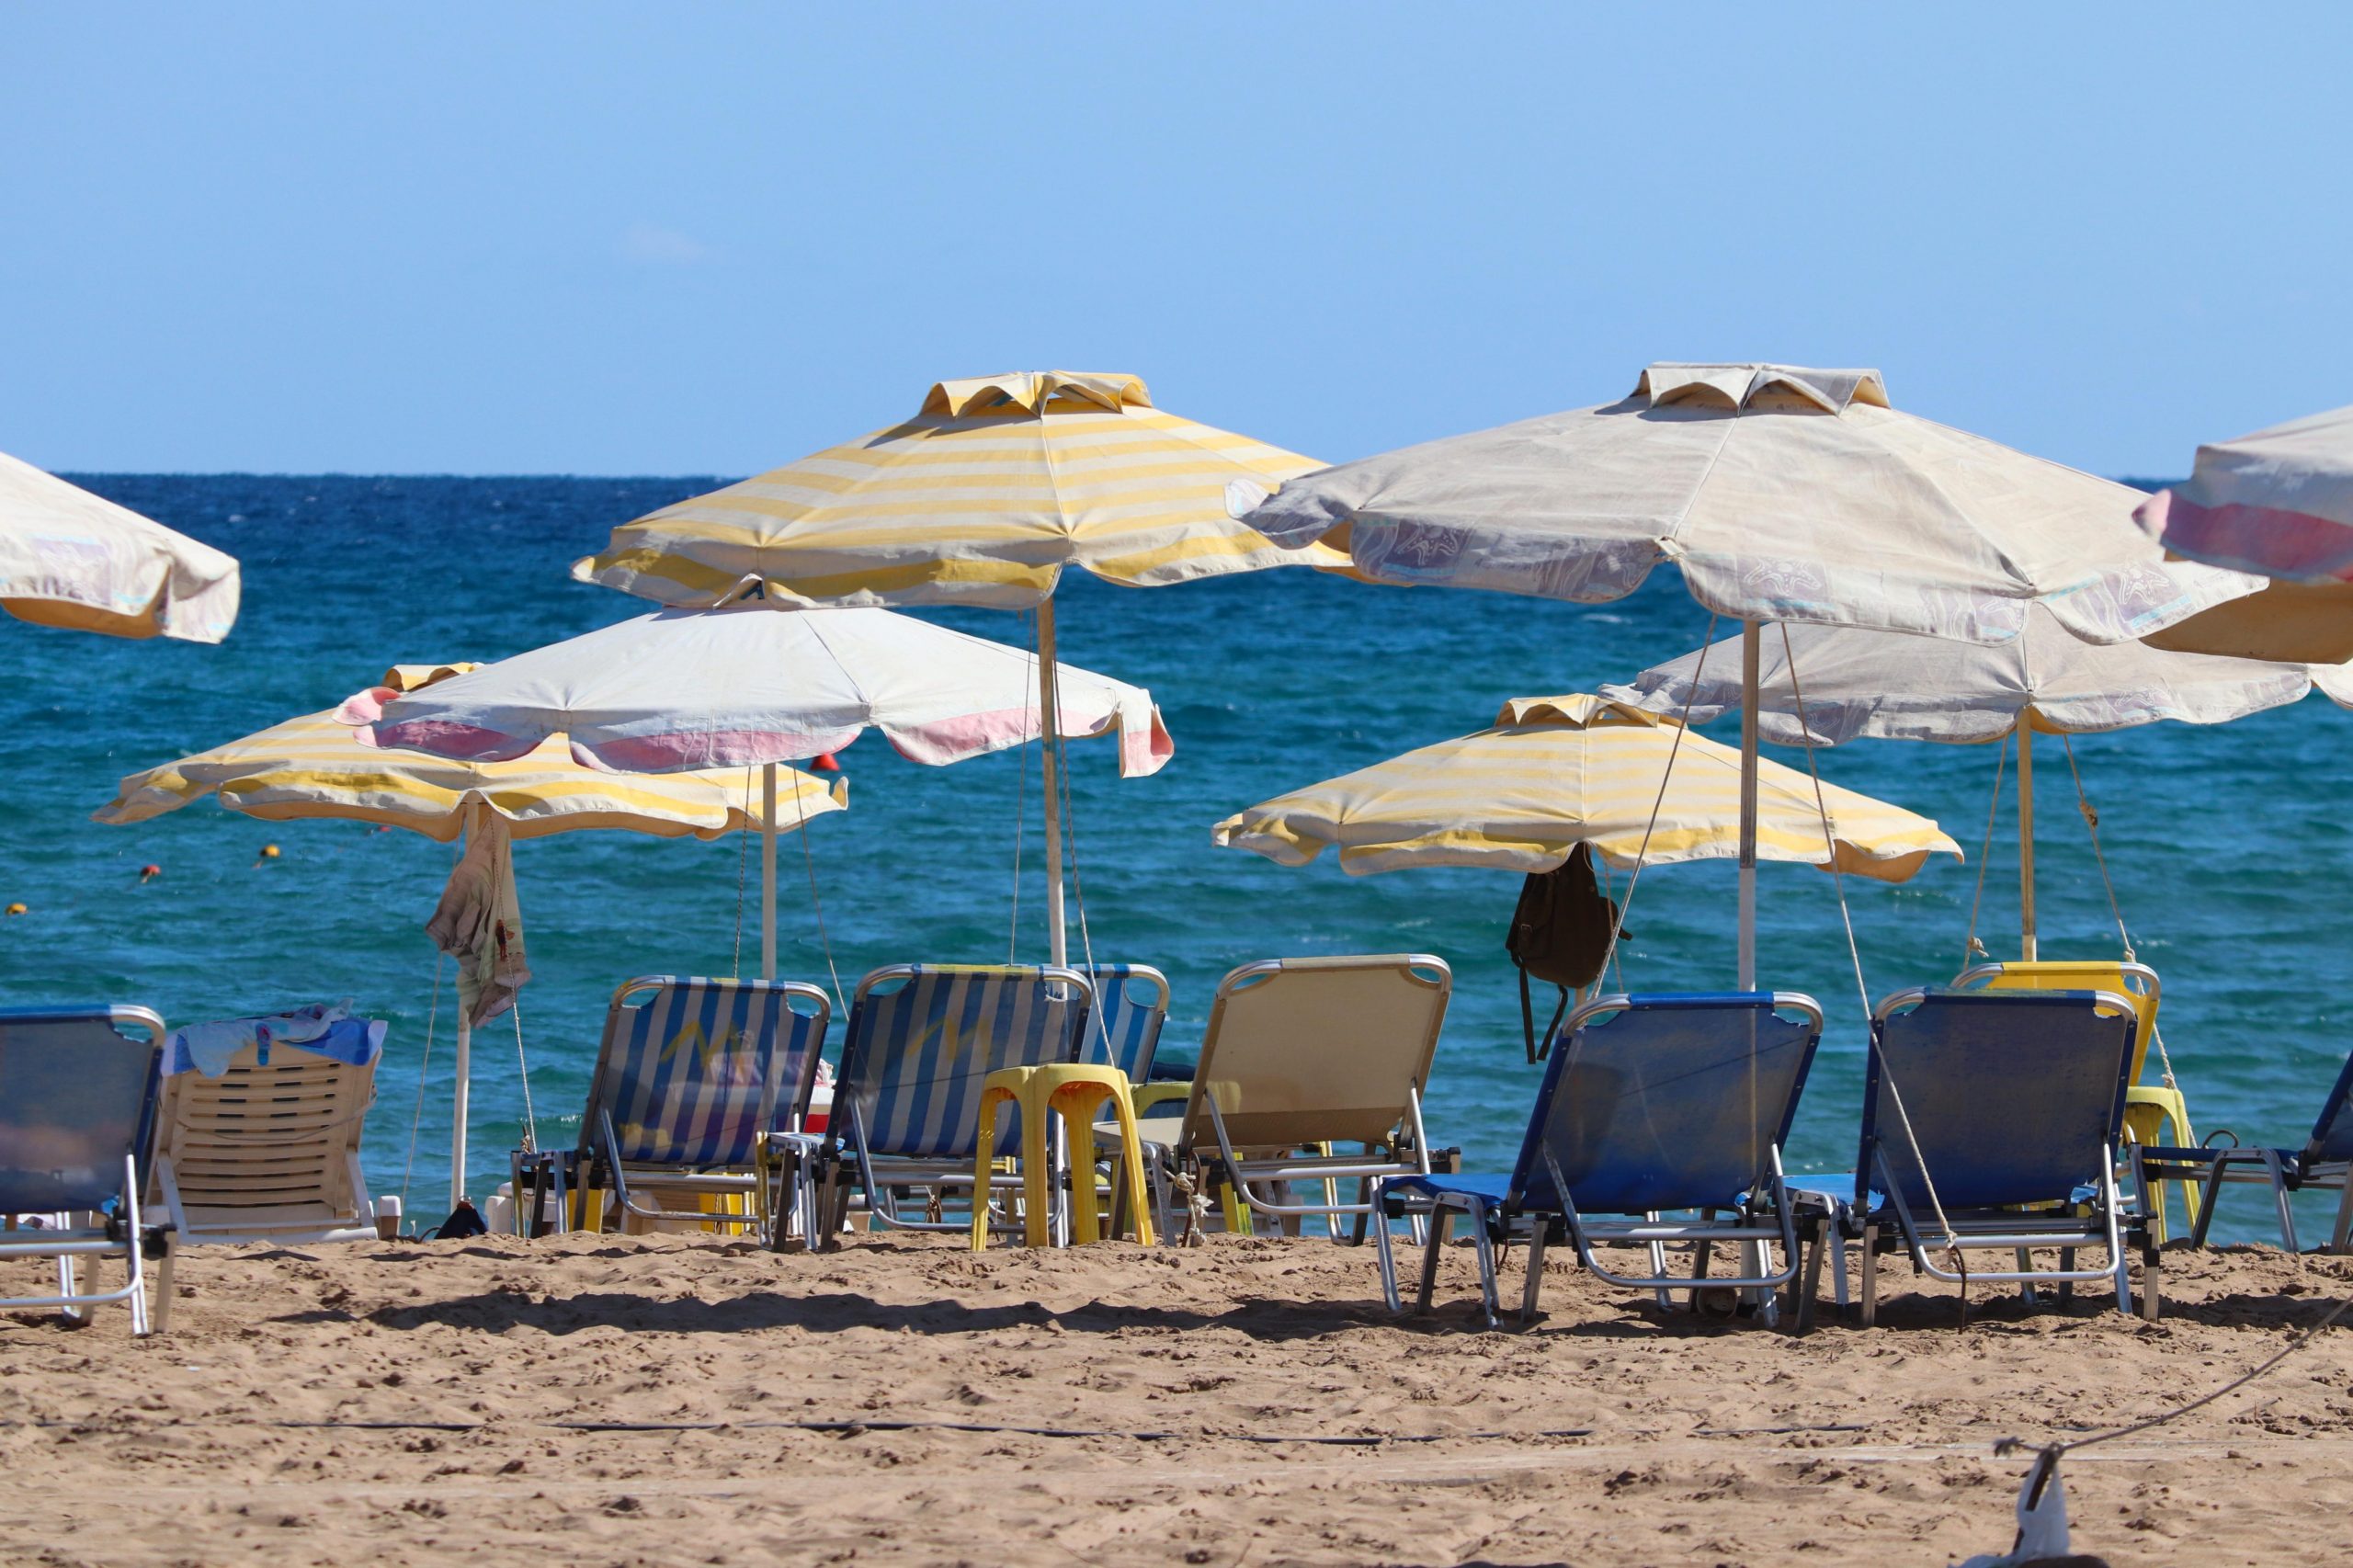 Spain’s Malaga declares war on unattended beach umbrellas